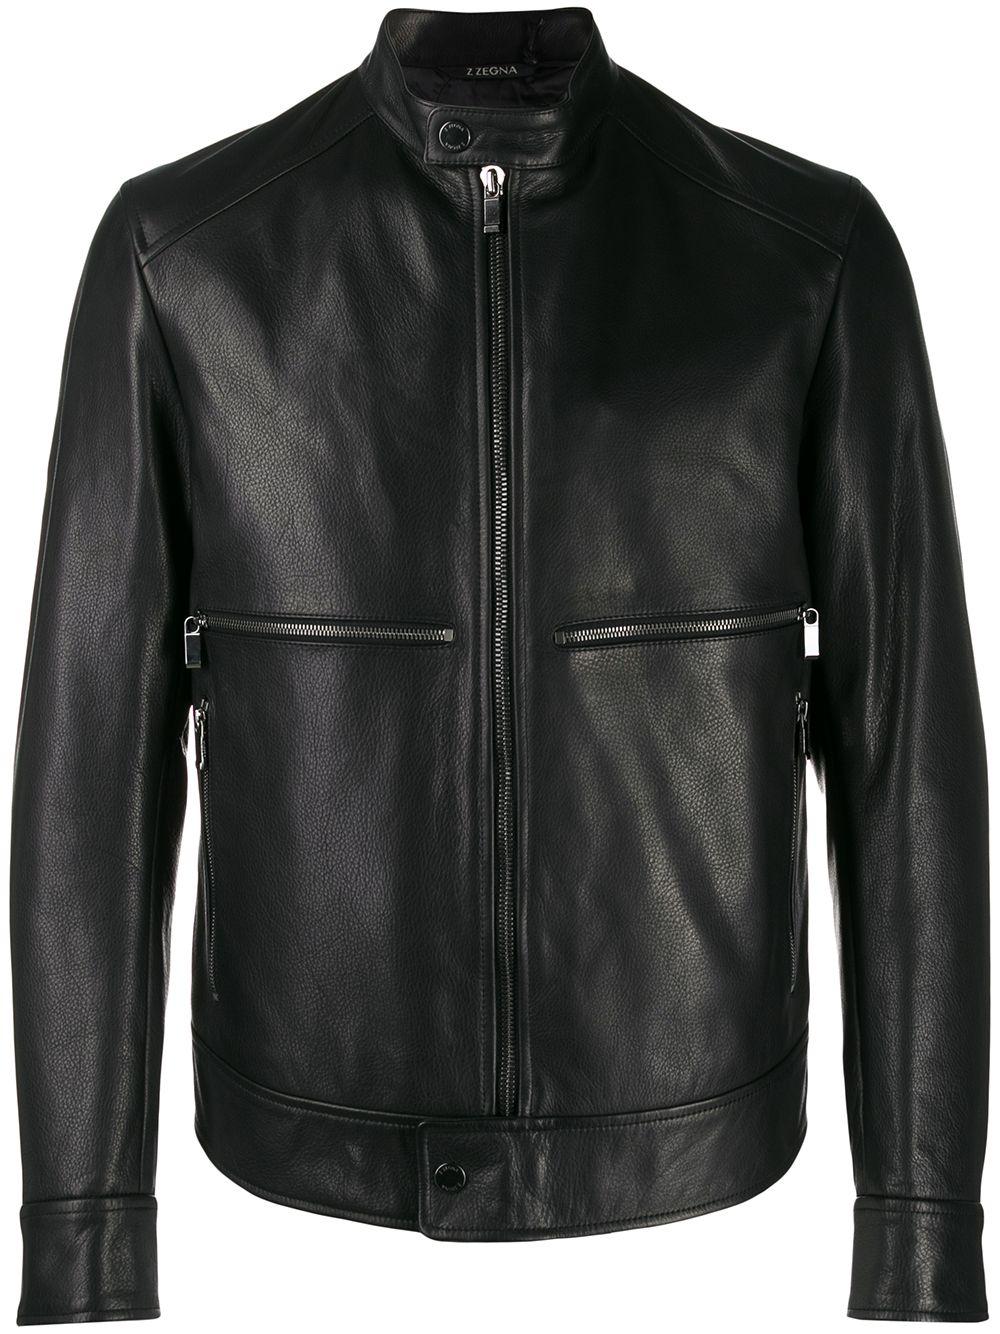 Z Zegna Banded Collar Leather Jacket in Black for Men - Lyst